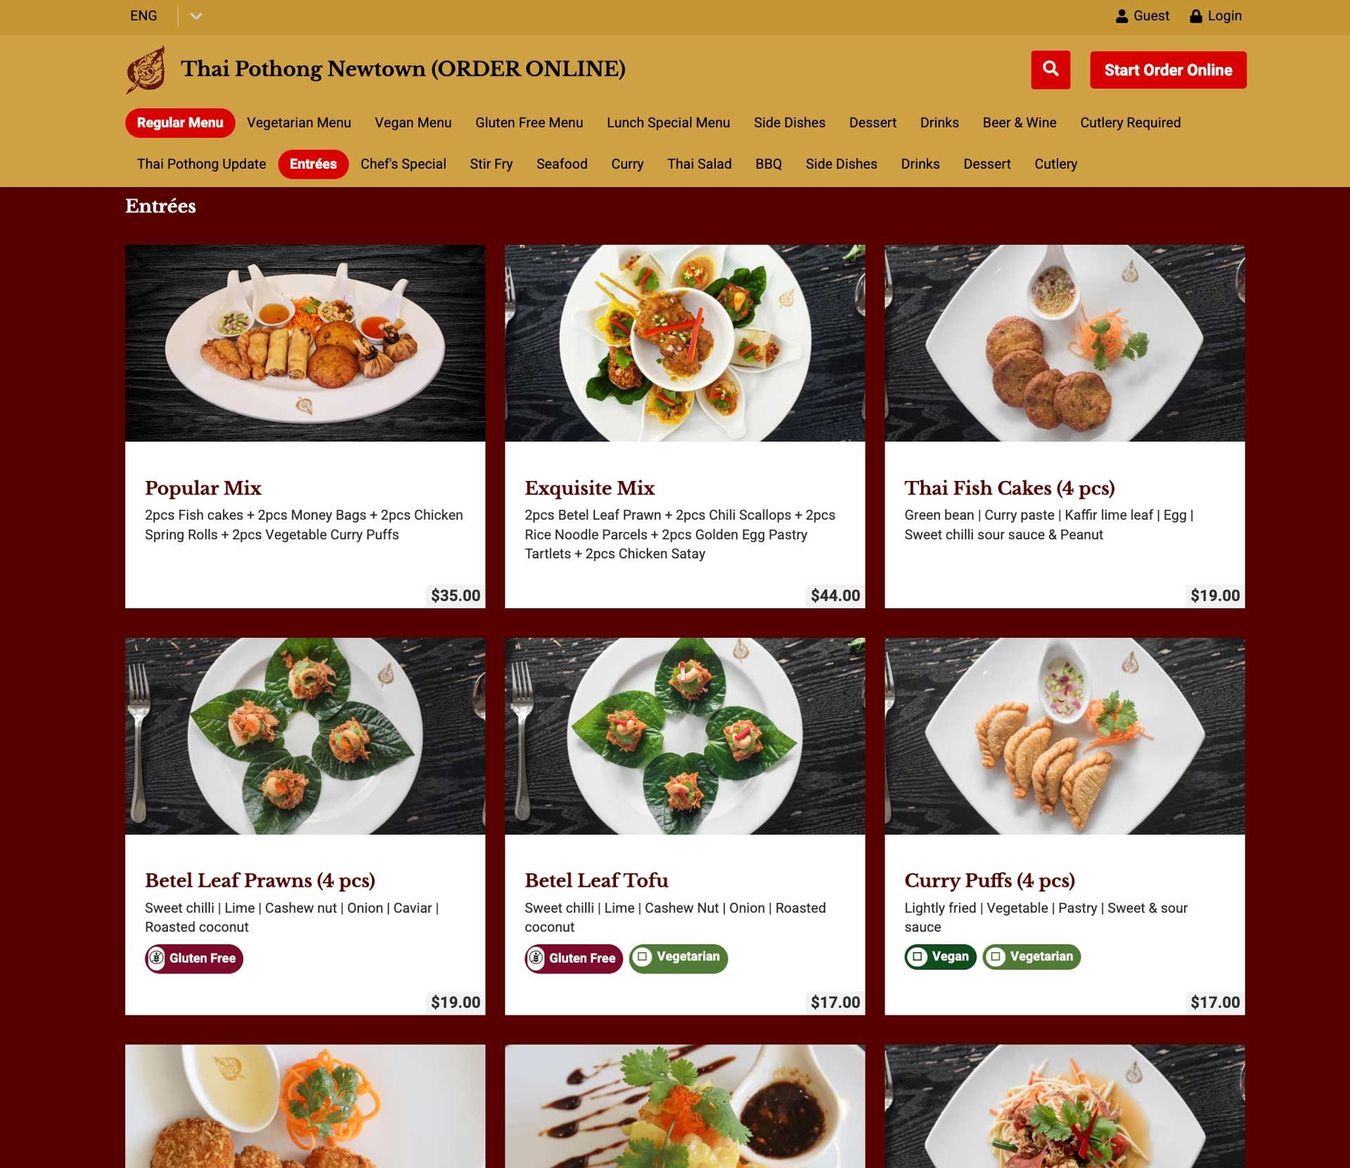 Commission Free Online Ordering System for Thai Pothong Restaurant Sydney